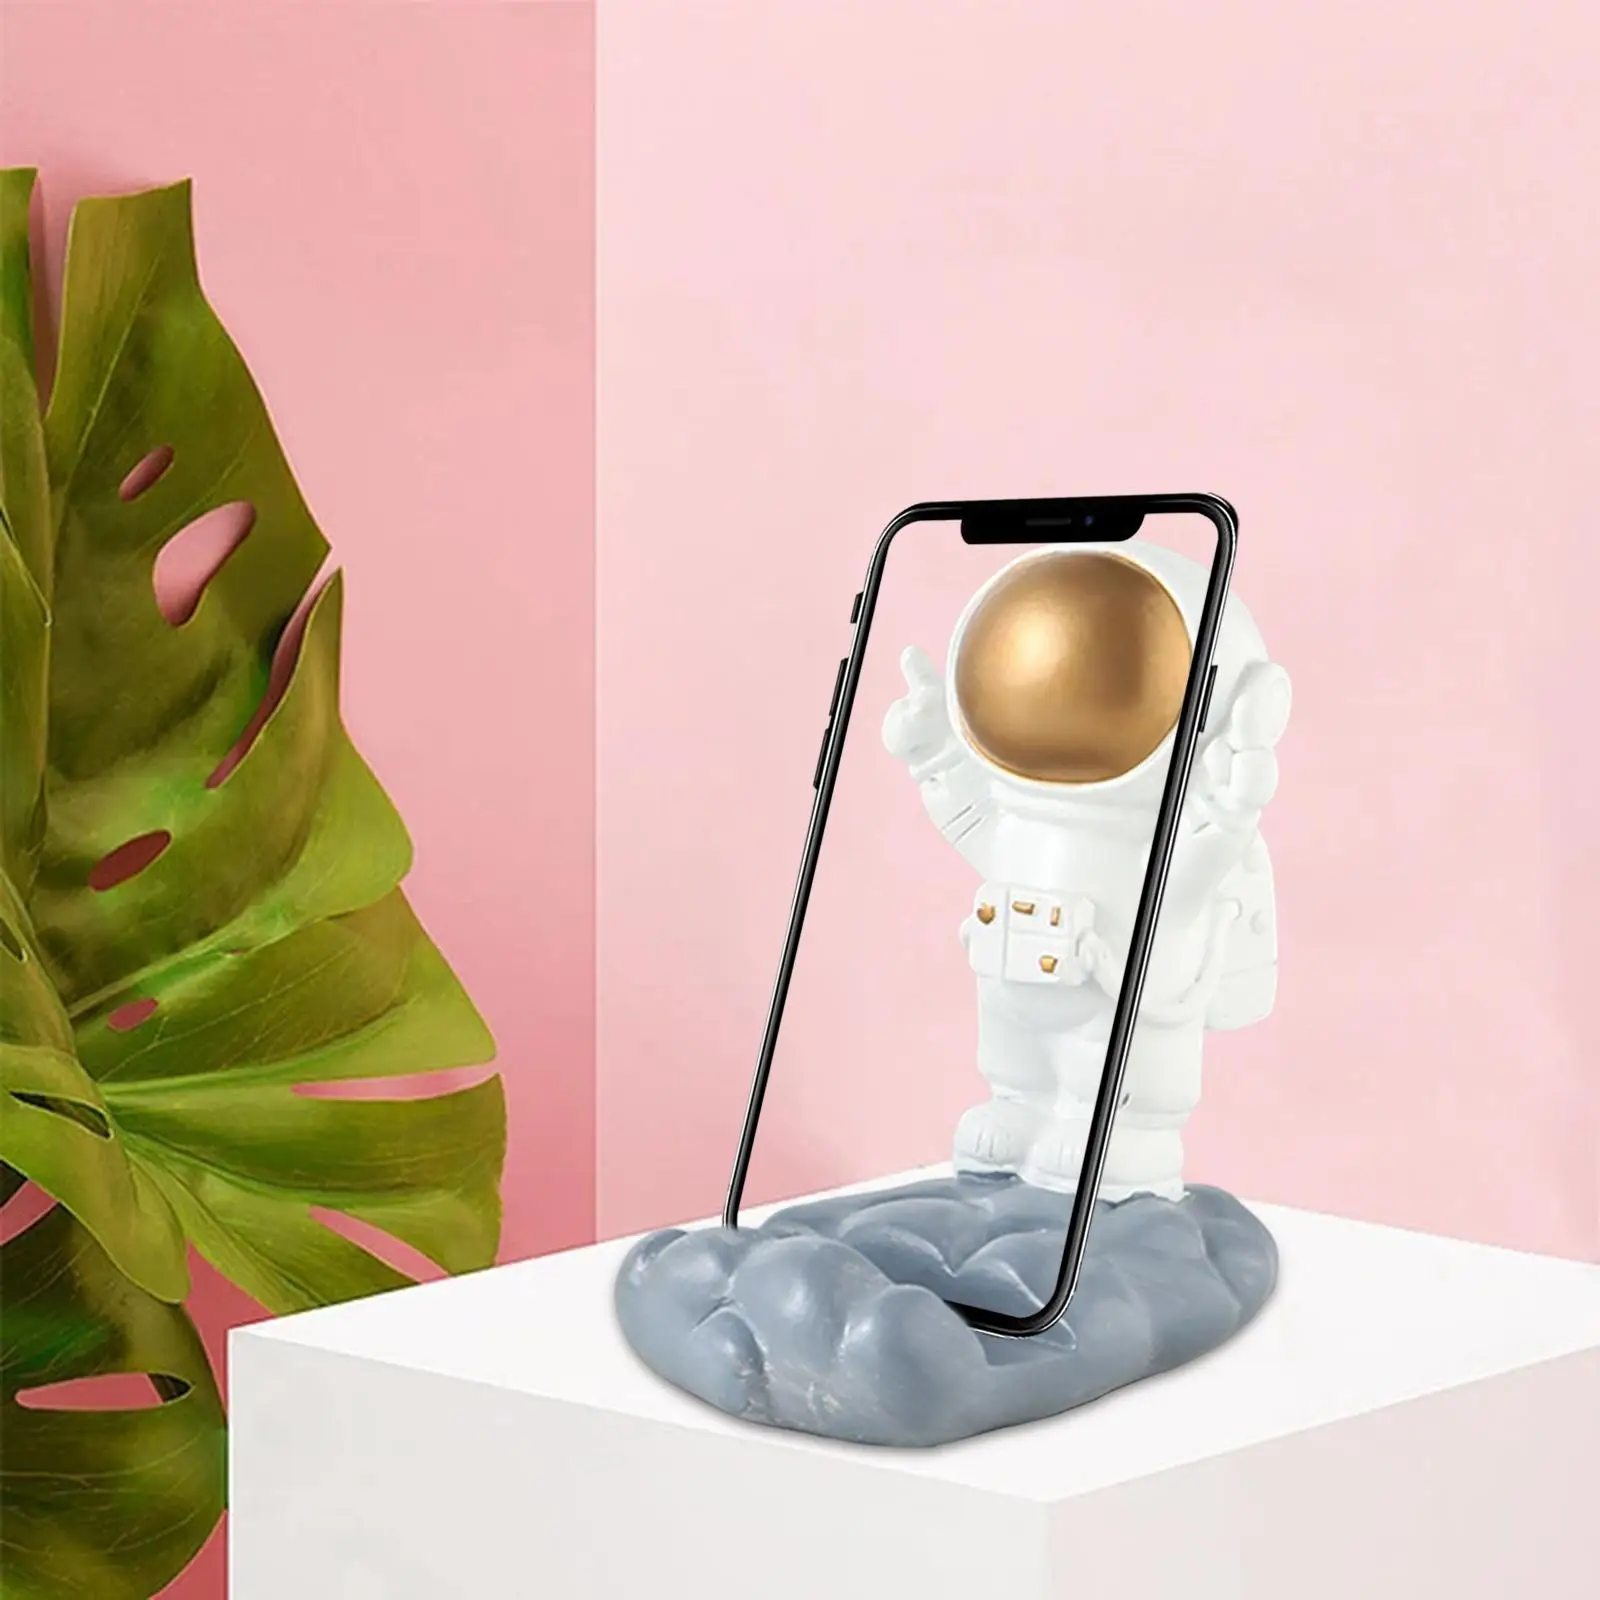 Desktop Phone Holder Resin Creative Spaceman Sculpture Desk Cellphone Cradle for Home Decor Office